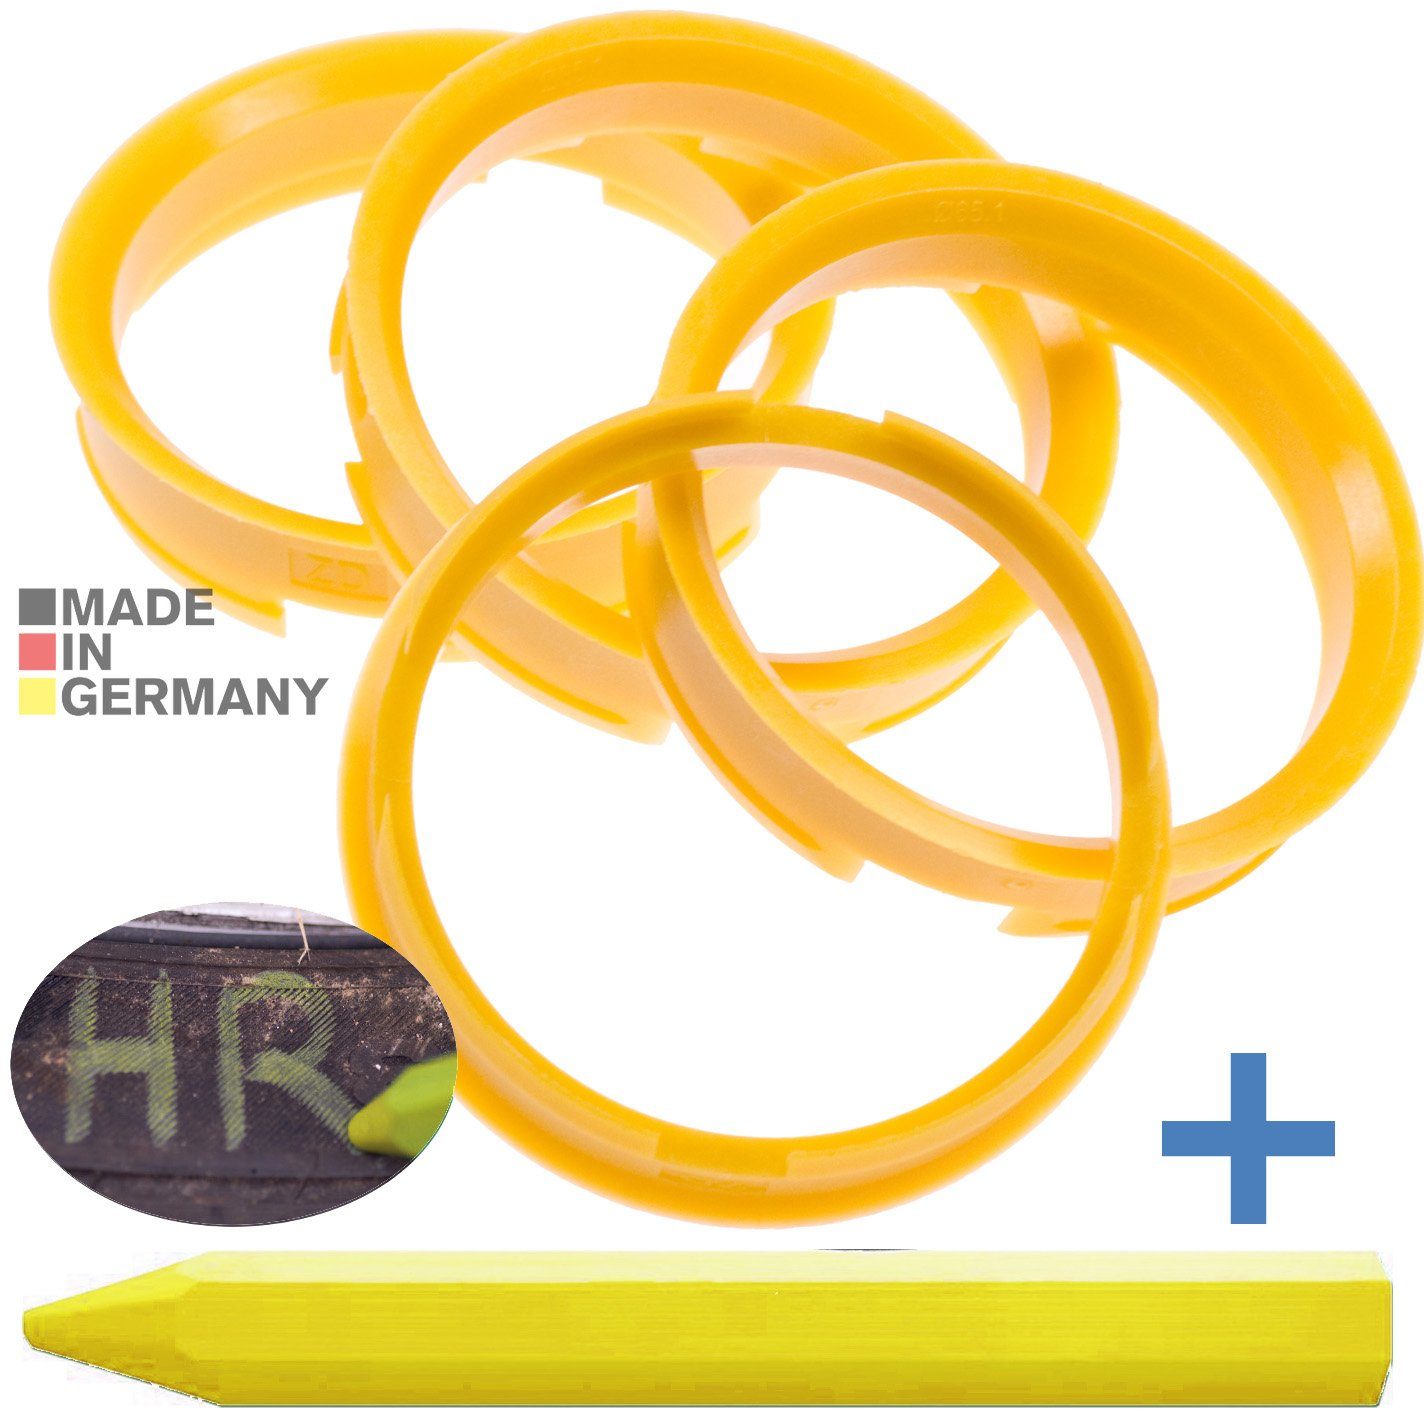 RKC Reifenstift 4X Zentrierringe Gelb Felgen Ringe + 1x Reifen Kreide Fett Stift, Maße: 72,6 x 65,1 mm | Reifenstifte